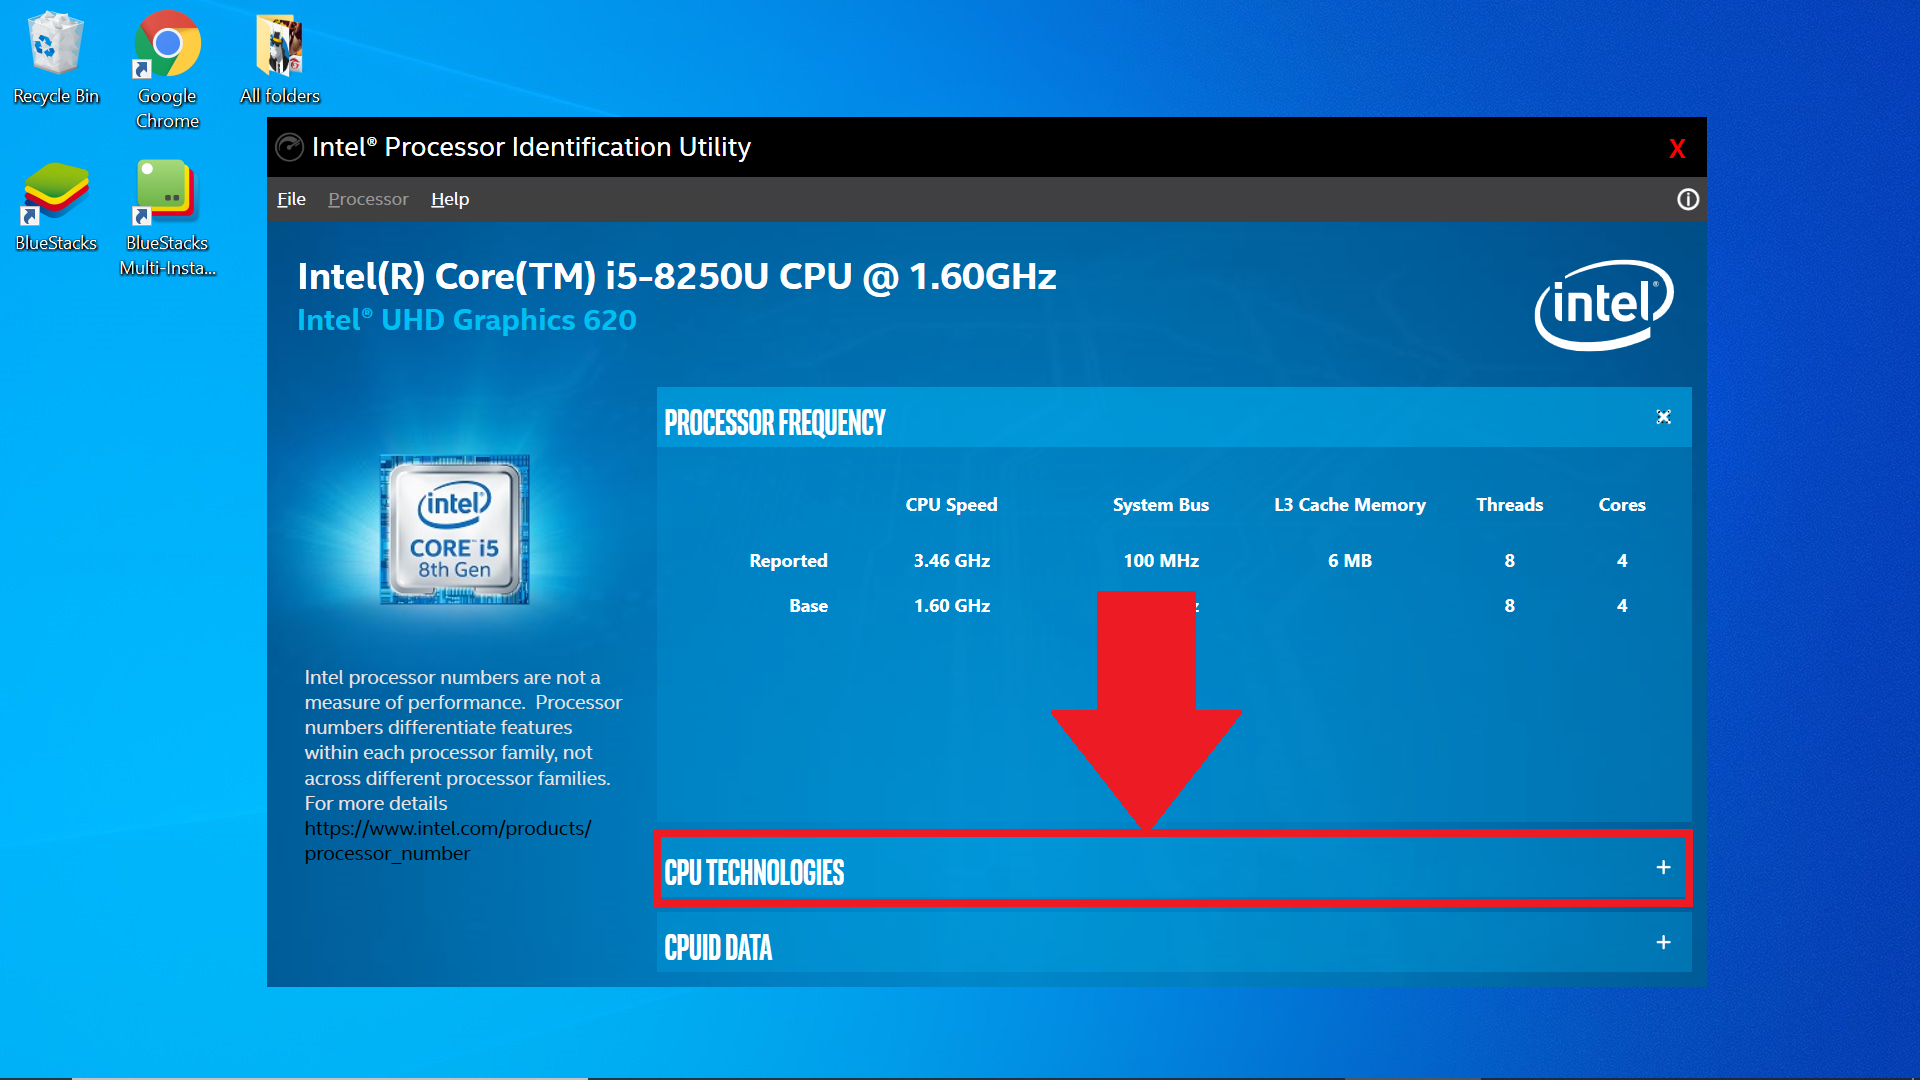 Intel Processor Identification Utility Application's Interface